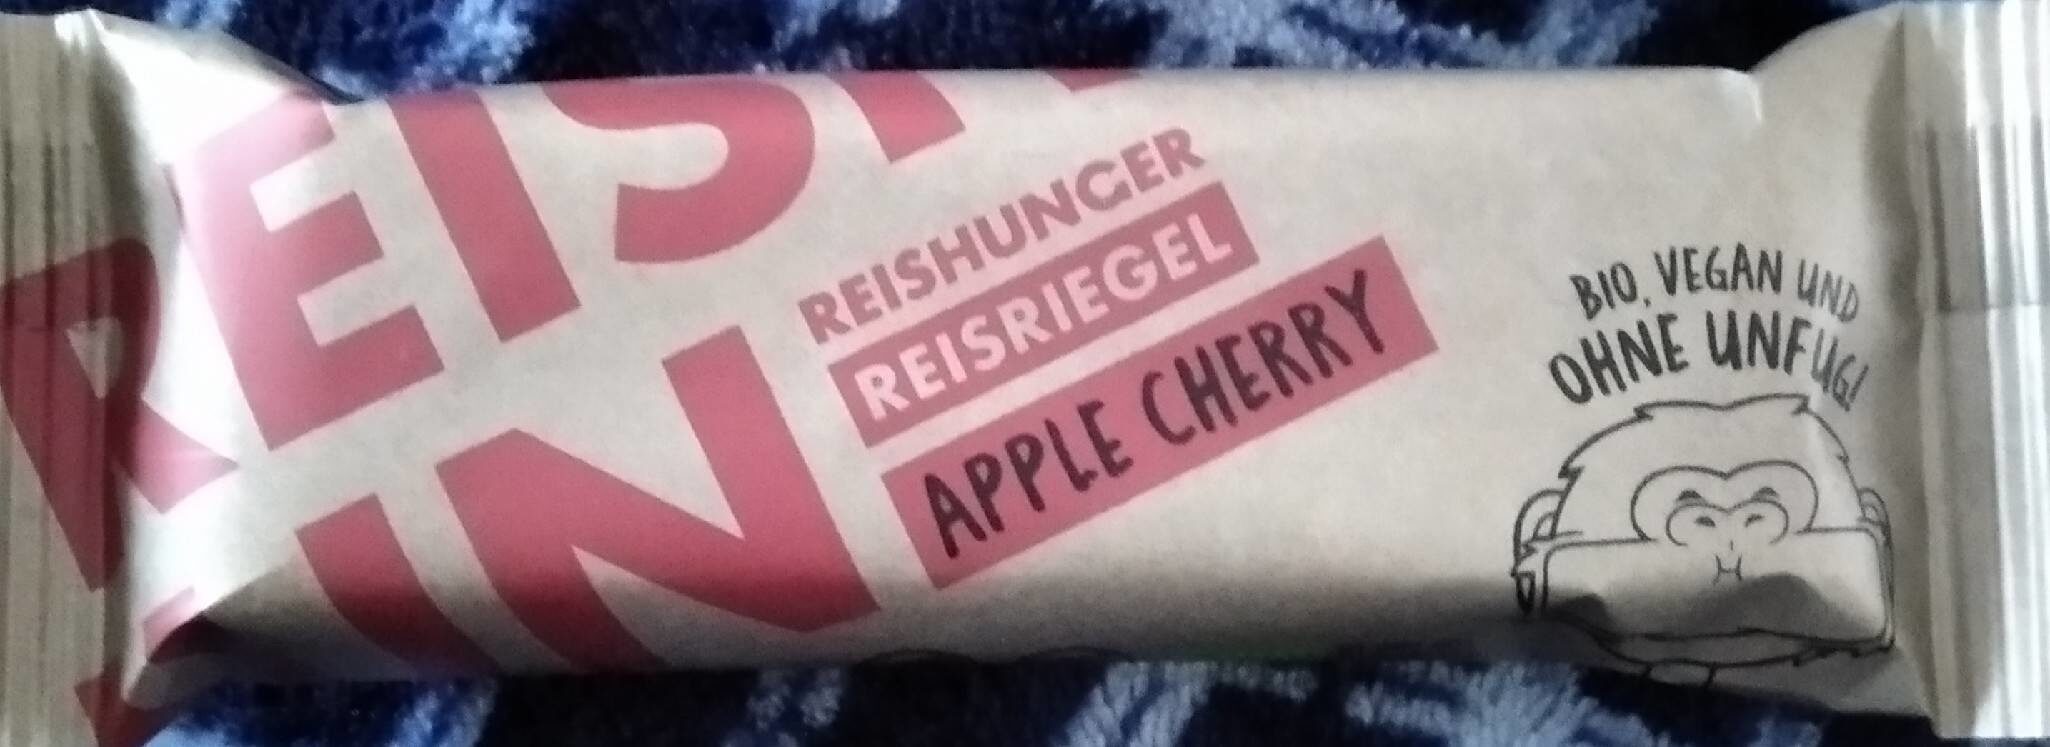 Reißriegel Apple Cherry - Product - de